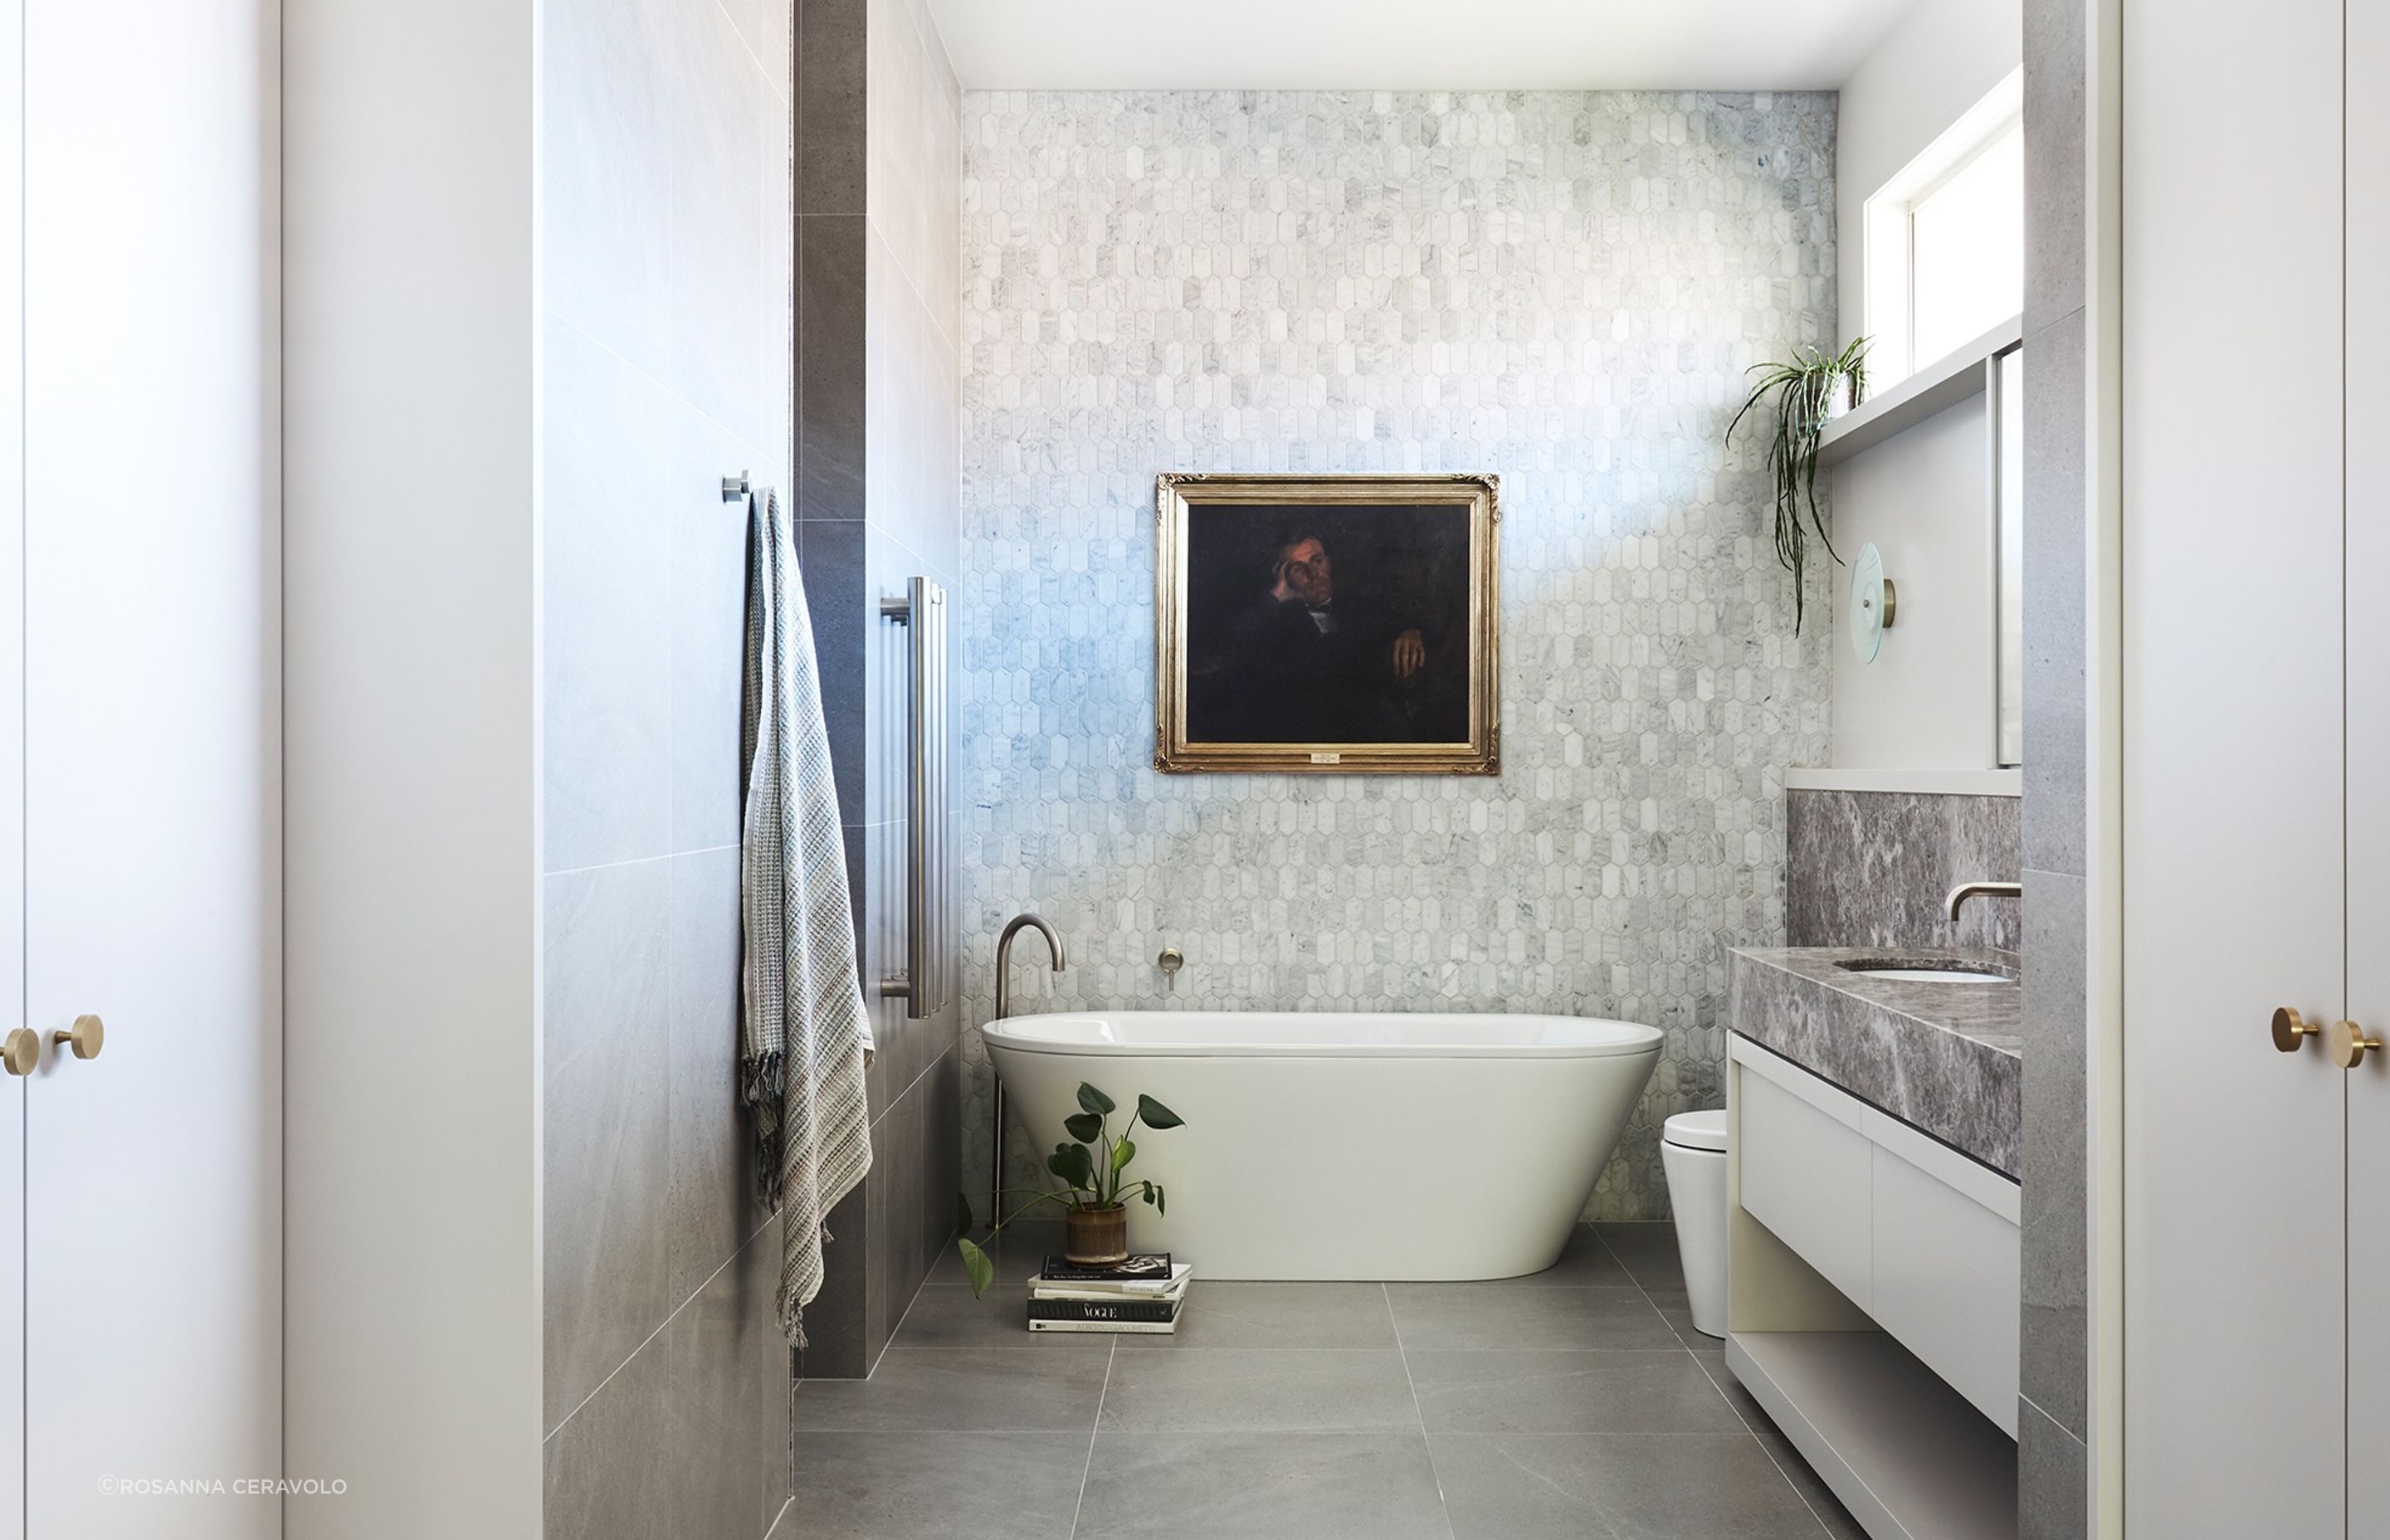 The bathroom at Camberwell House by Rosanna Ceravolo - Photography: Christine Francis